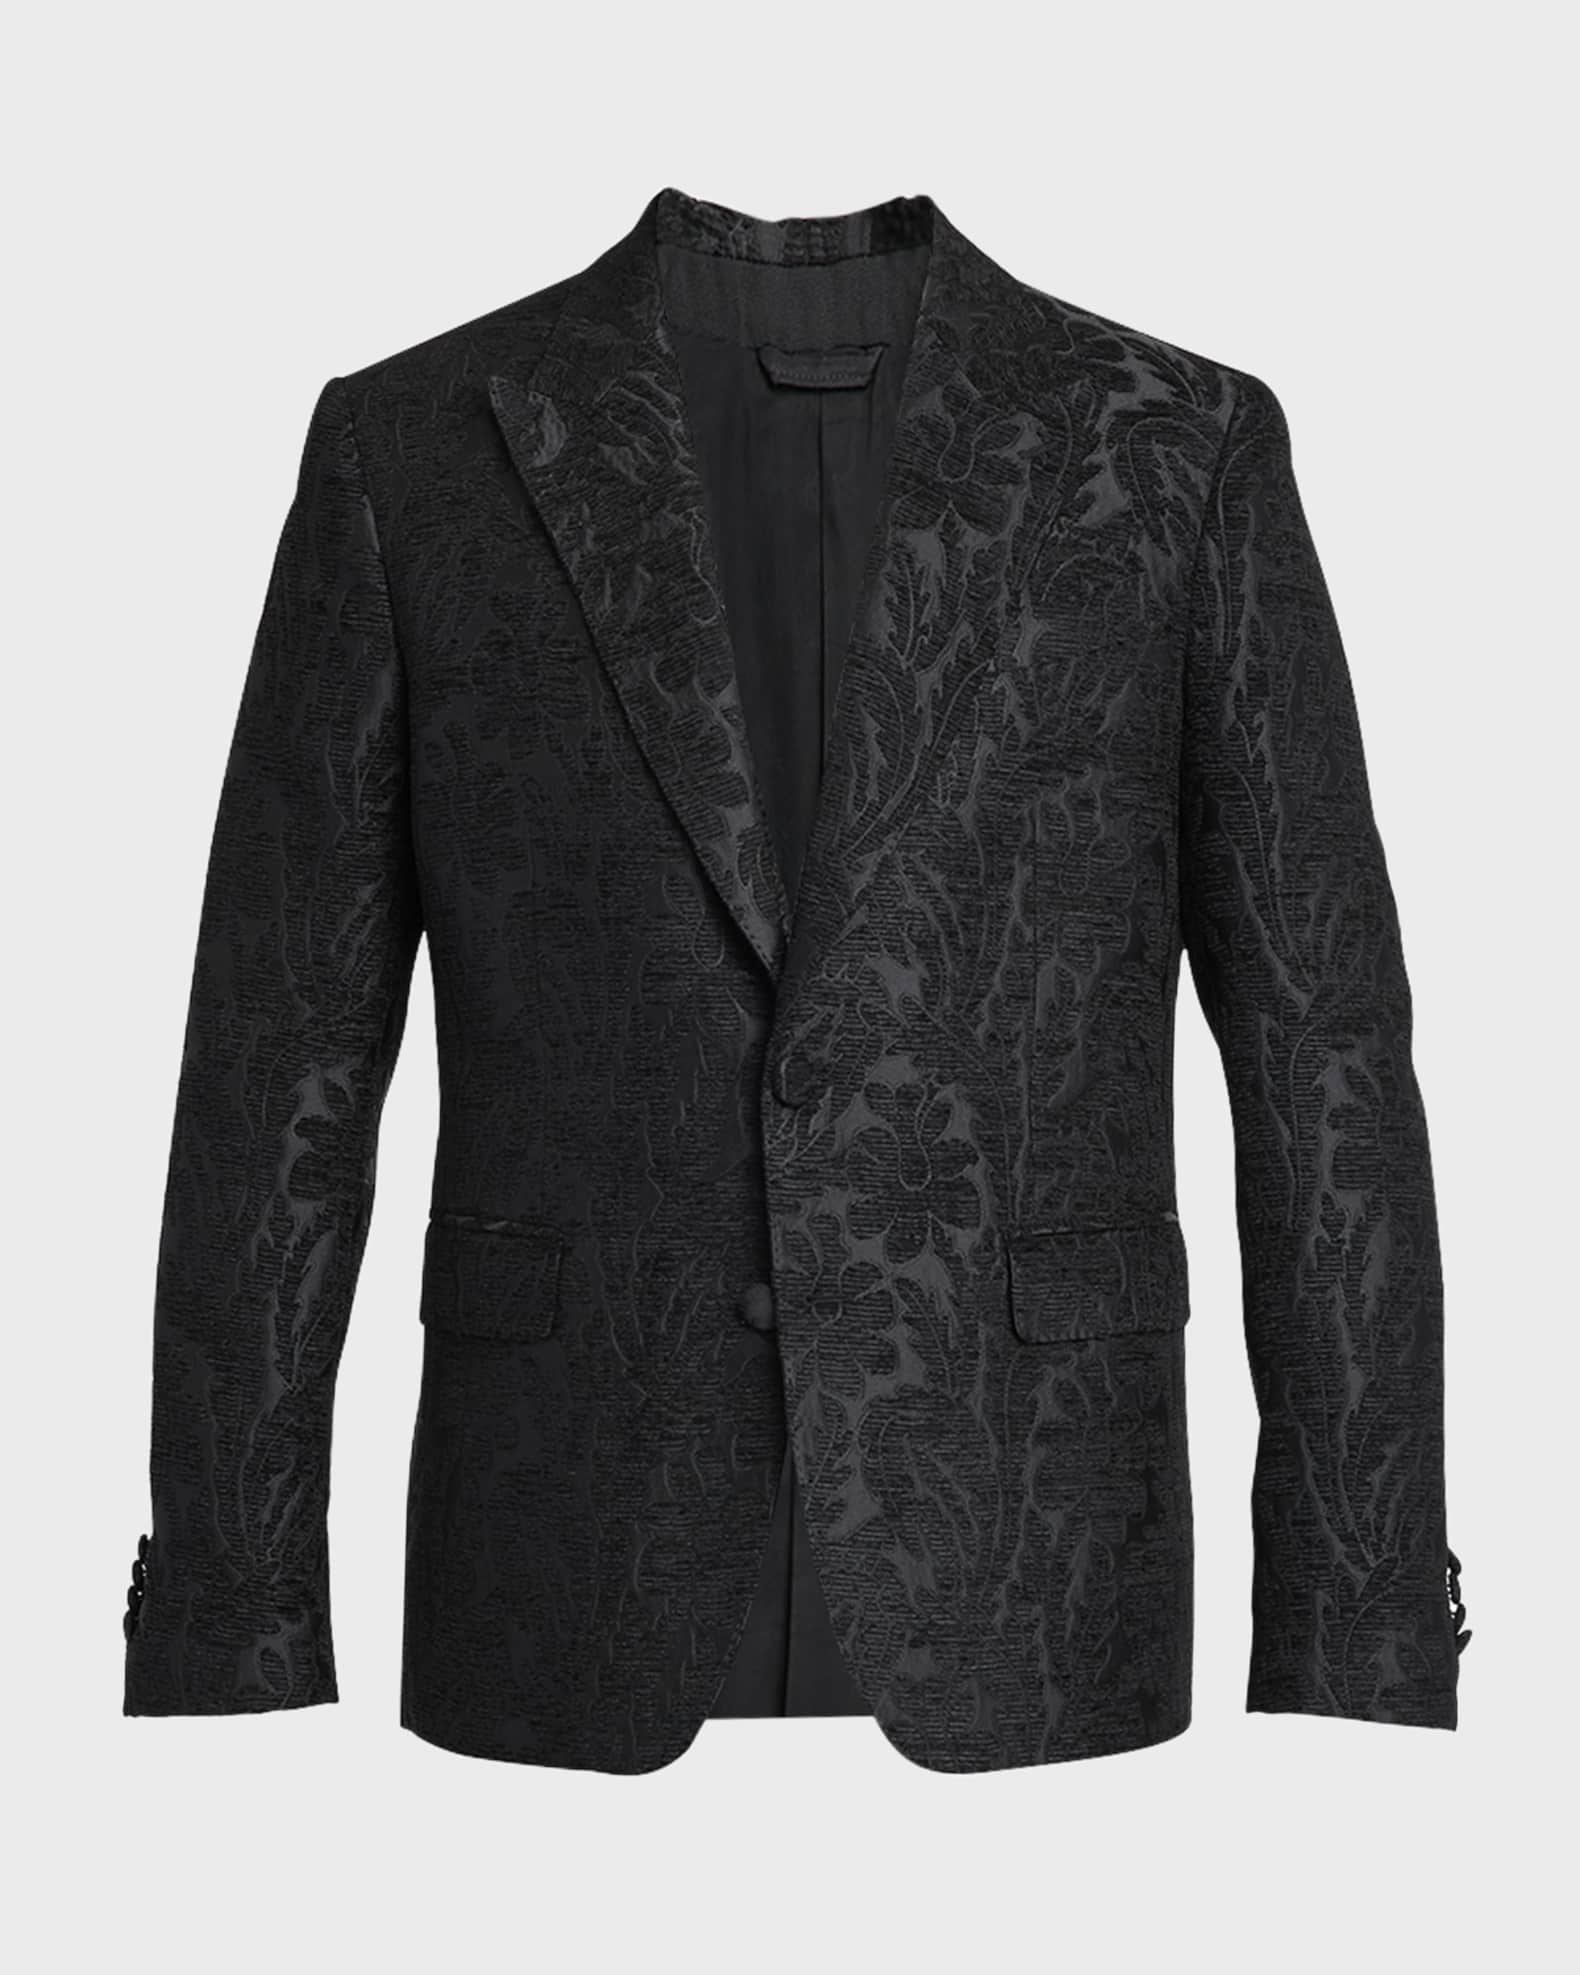 CASABLANCA Monogram Jacquard Velour Jacket in Metallic for Men